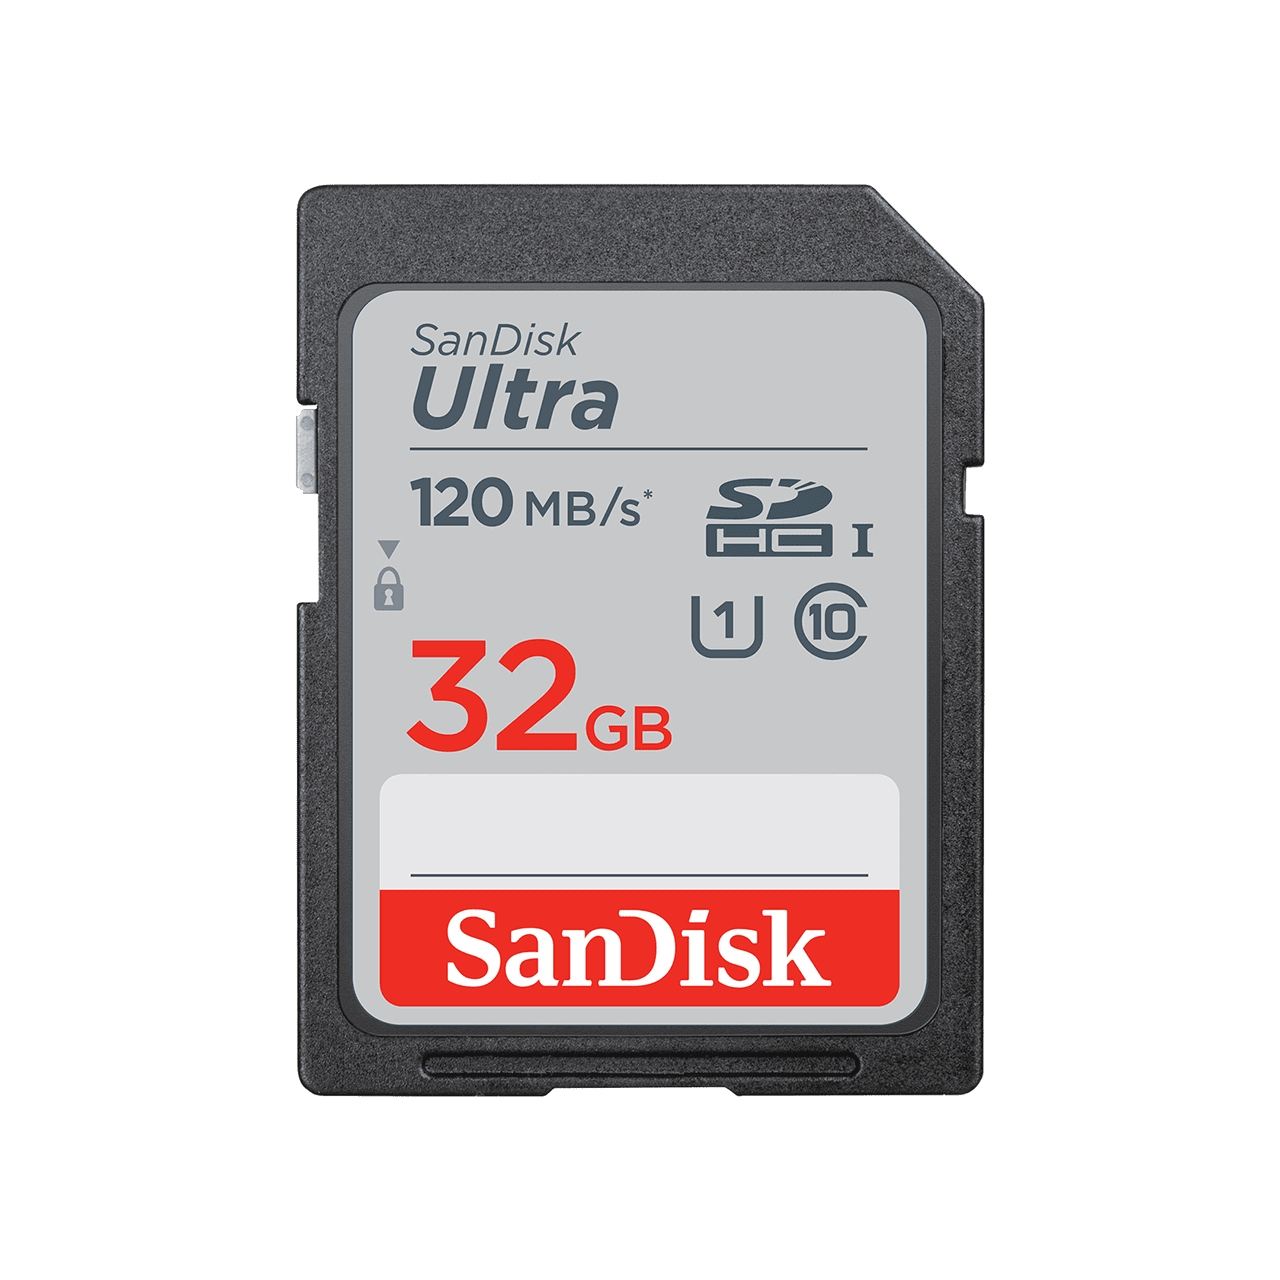 SD Card 32GB SanDisk SDHC UHS-I 120MB/sec